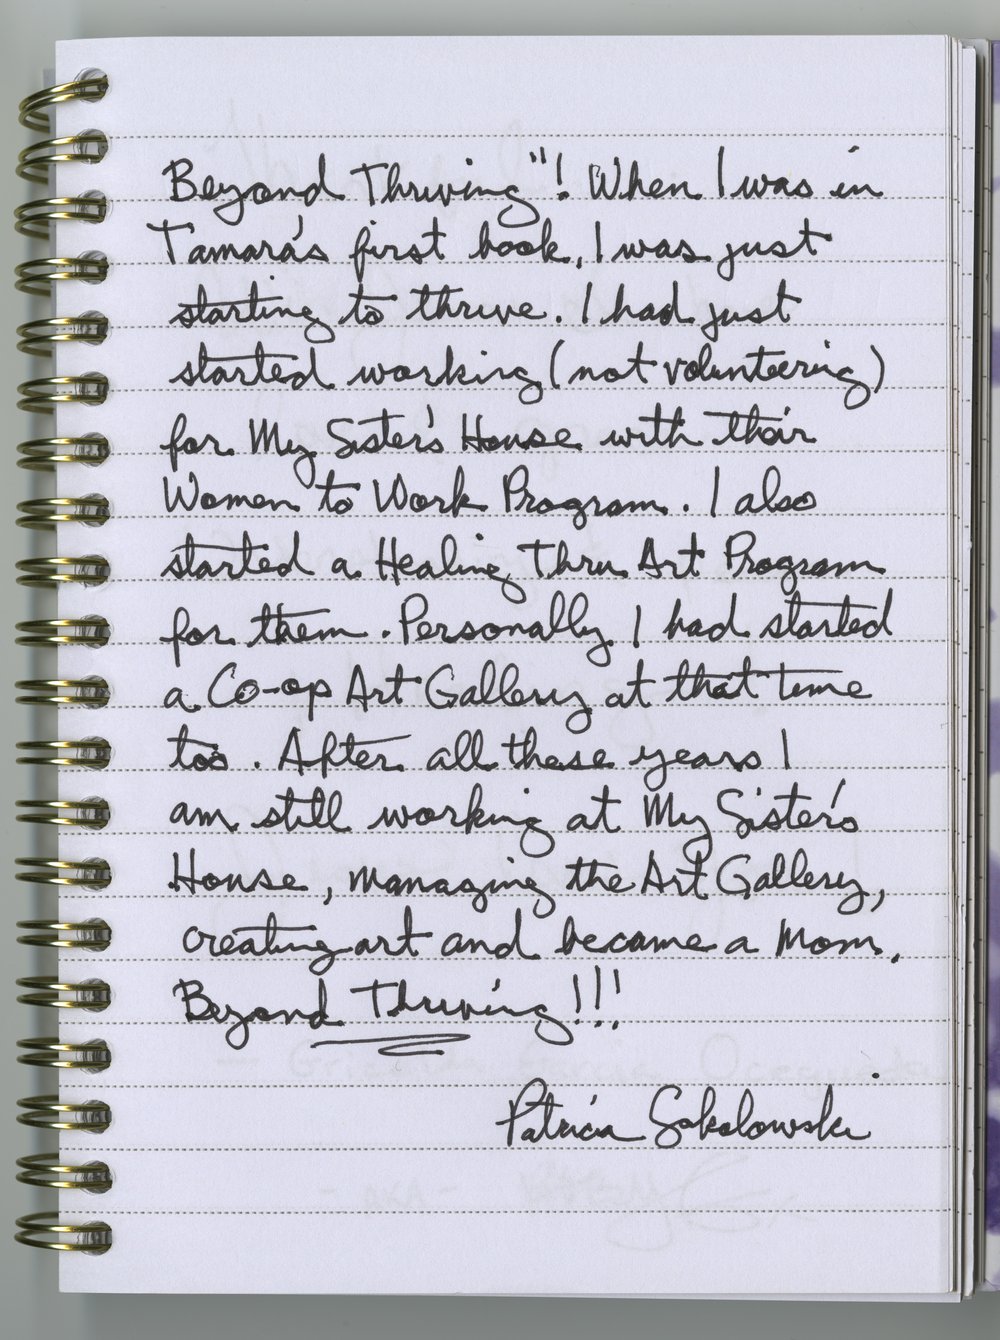 Patricia Sokolowski's handwritten journal entry.